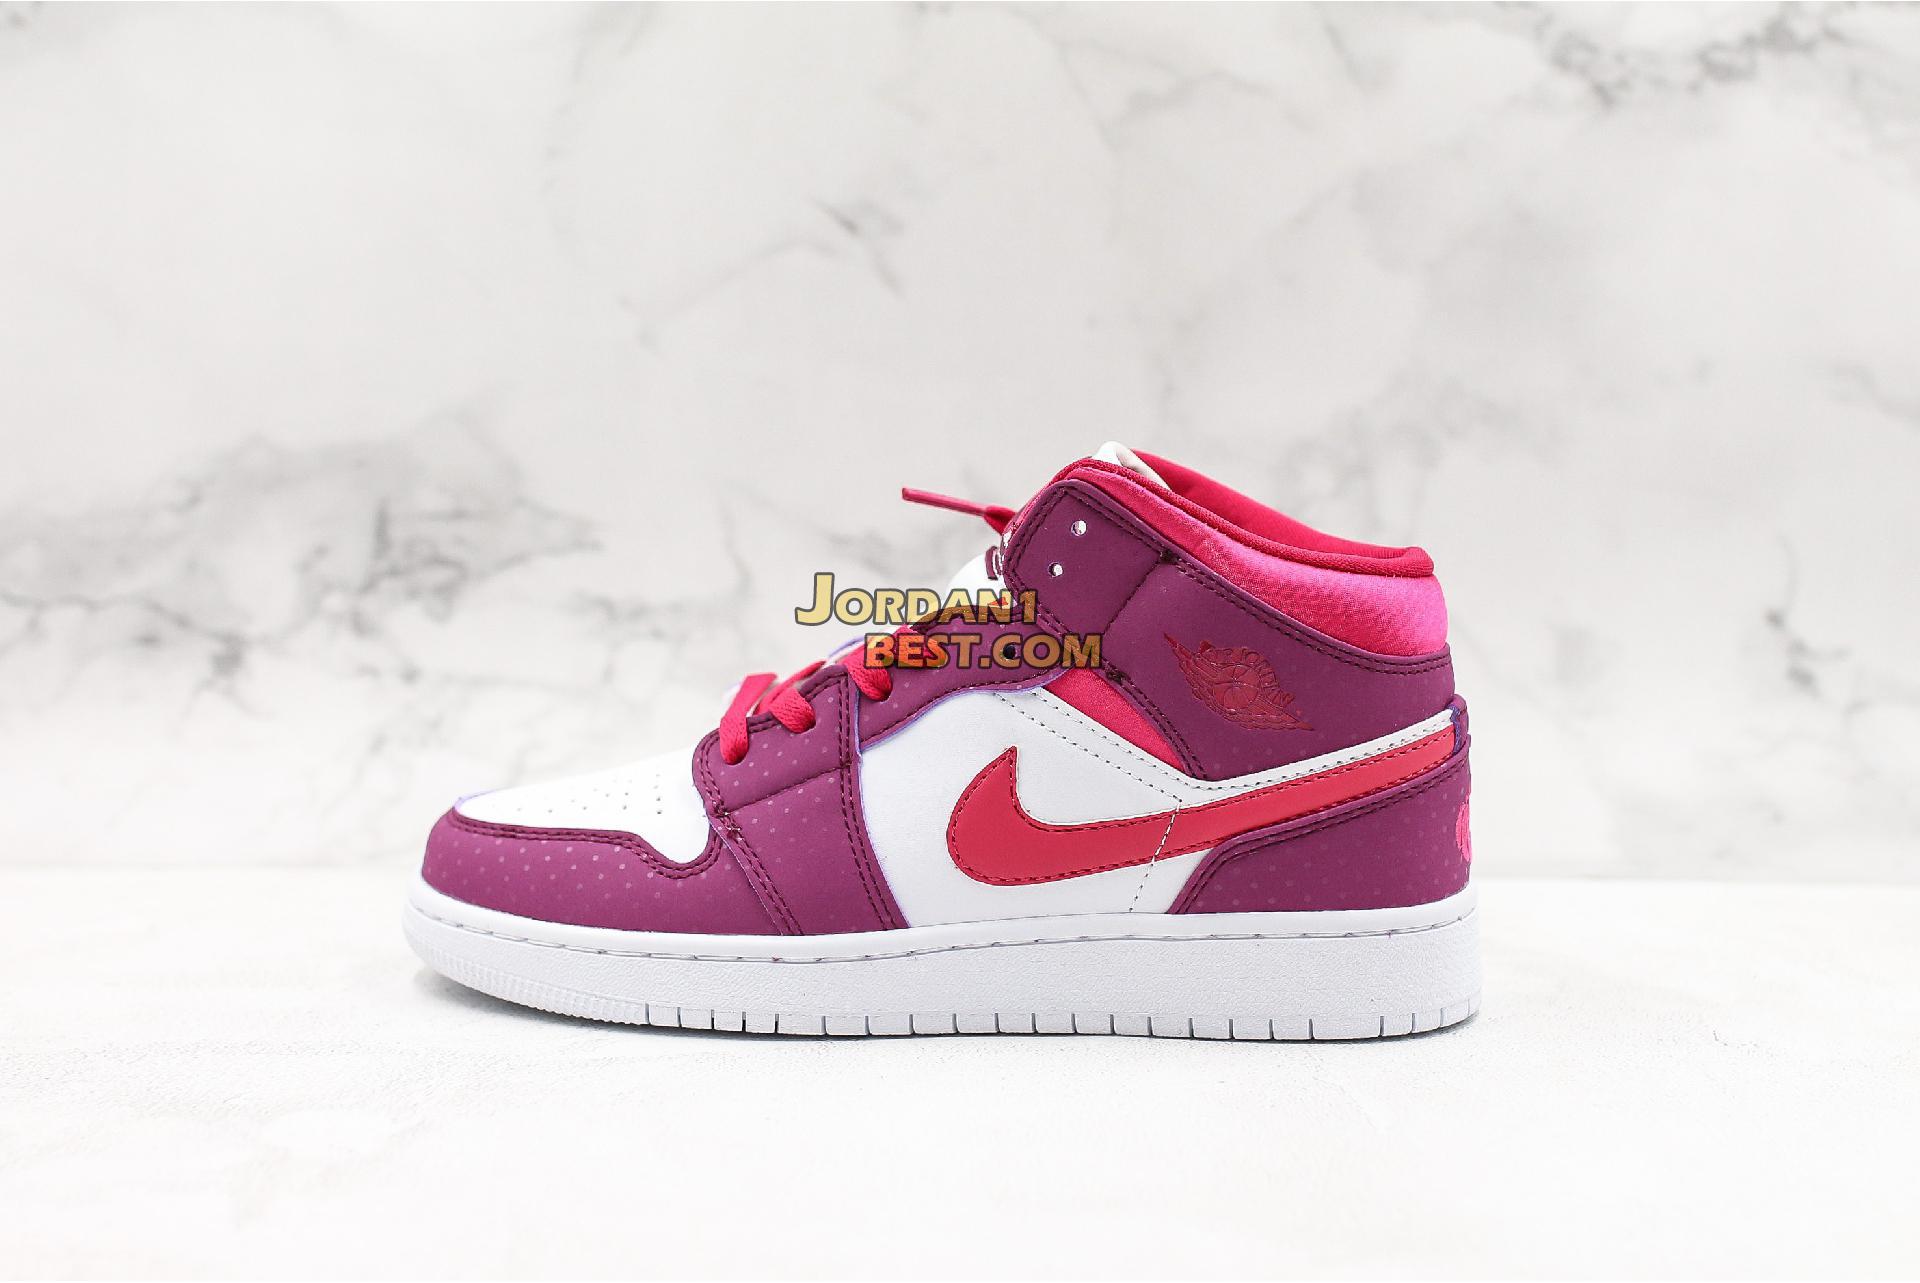 best replicas Air Jordan 1 Mid GS "Rush Pink" 555112-661 Womens true berry/rush pink-white Shoes replicas On Wholesale Sale Online